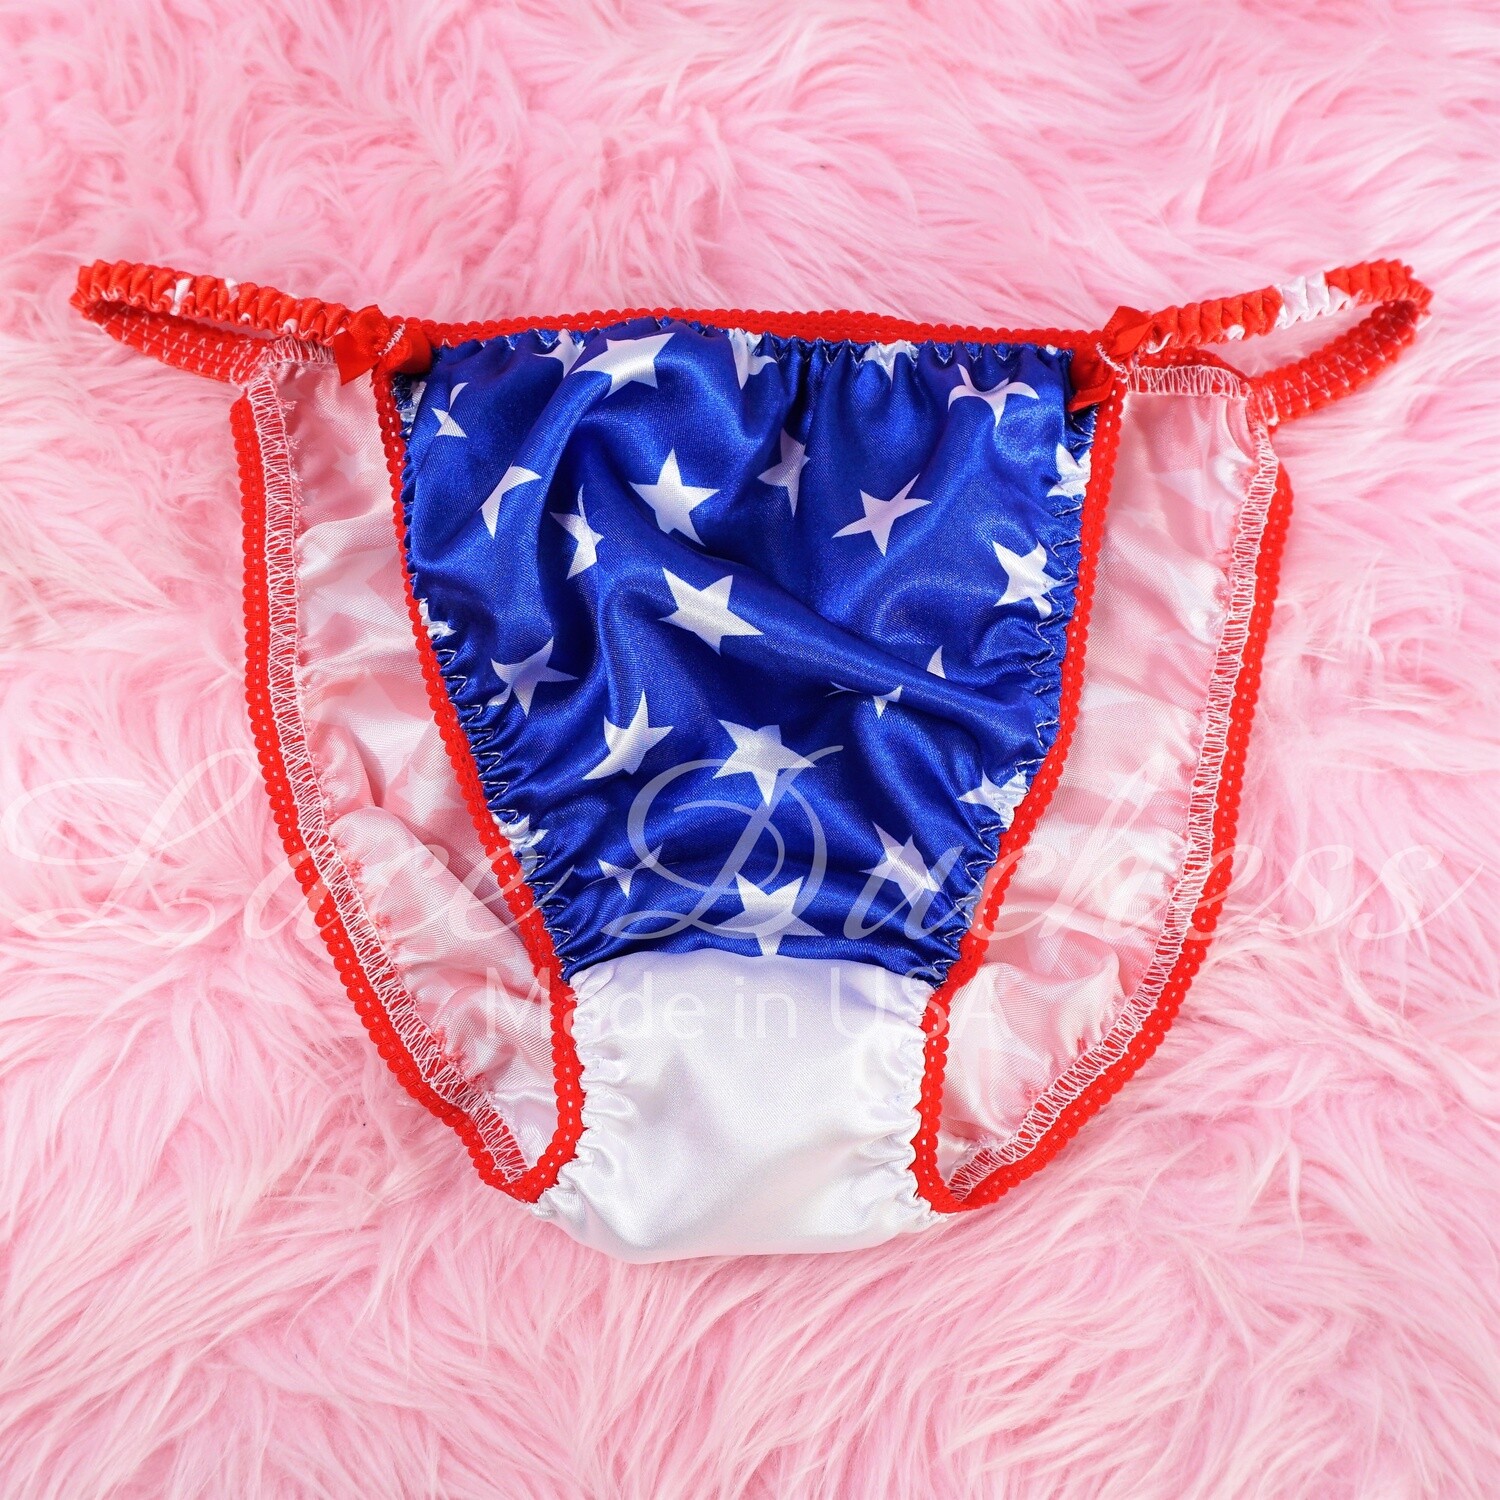 Lace Duchess MEN'S Classic 80's cut July 4th Red White & Blue Stars Vintage style satin panties - String bikini